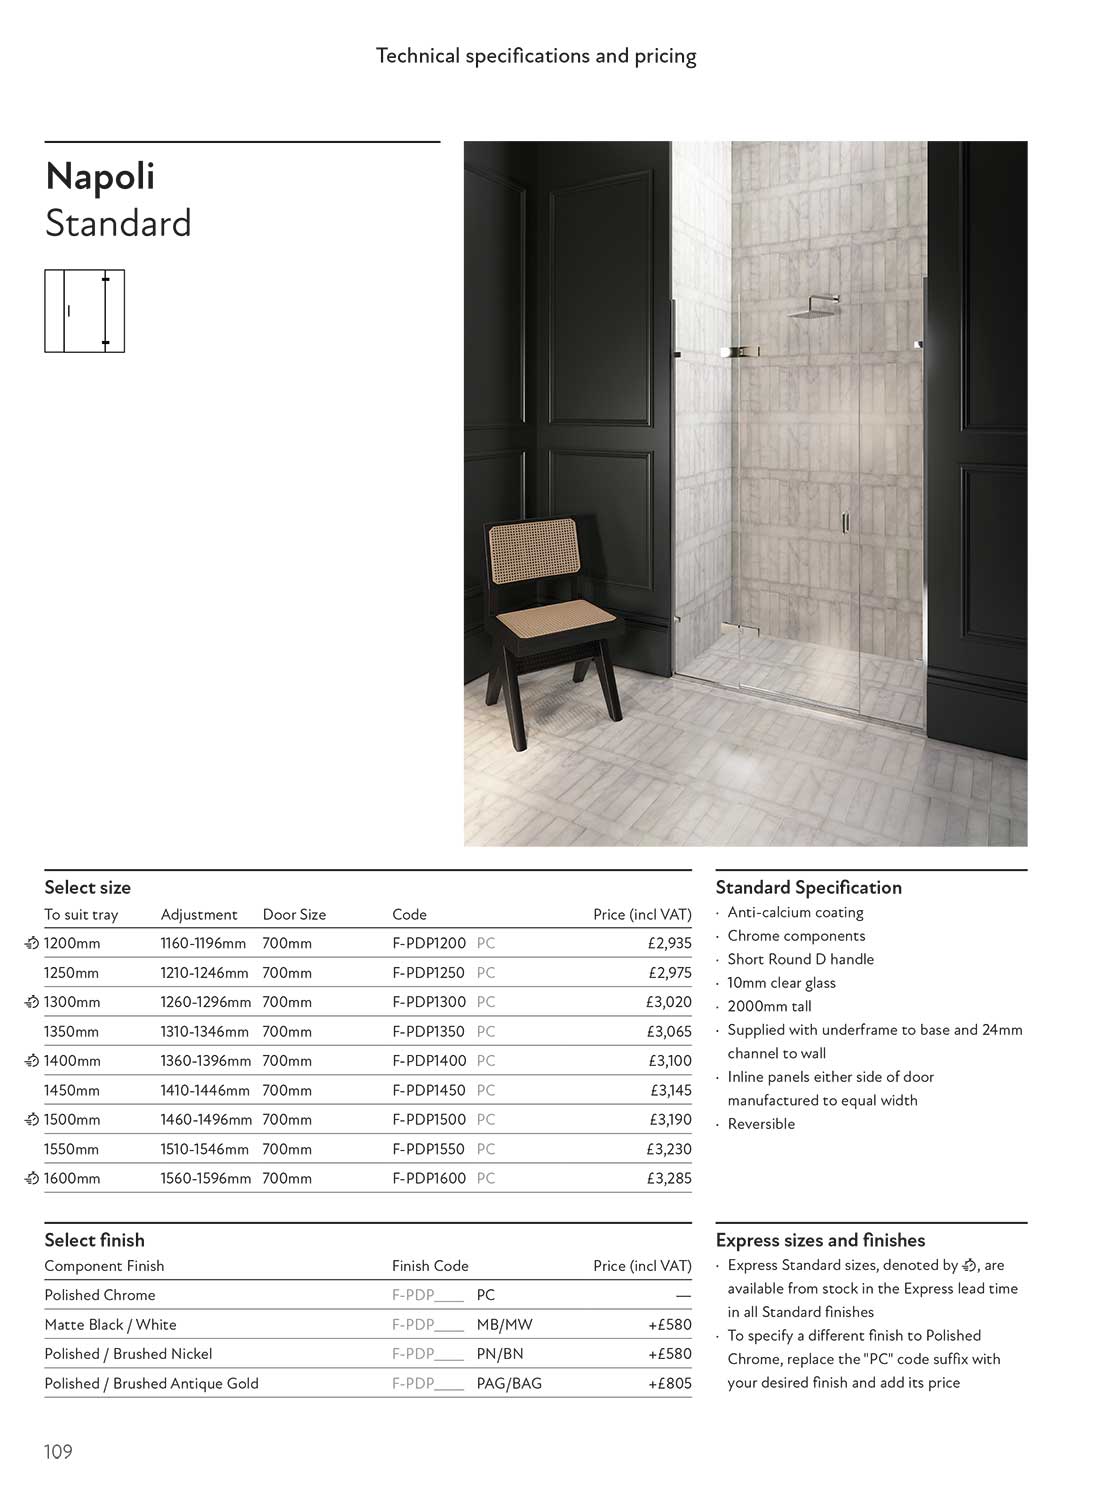 Napoli Standard brochure page